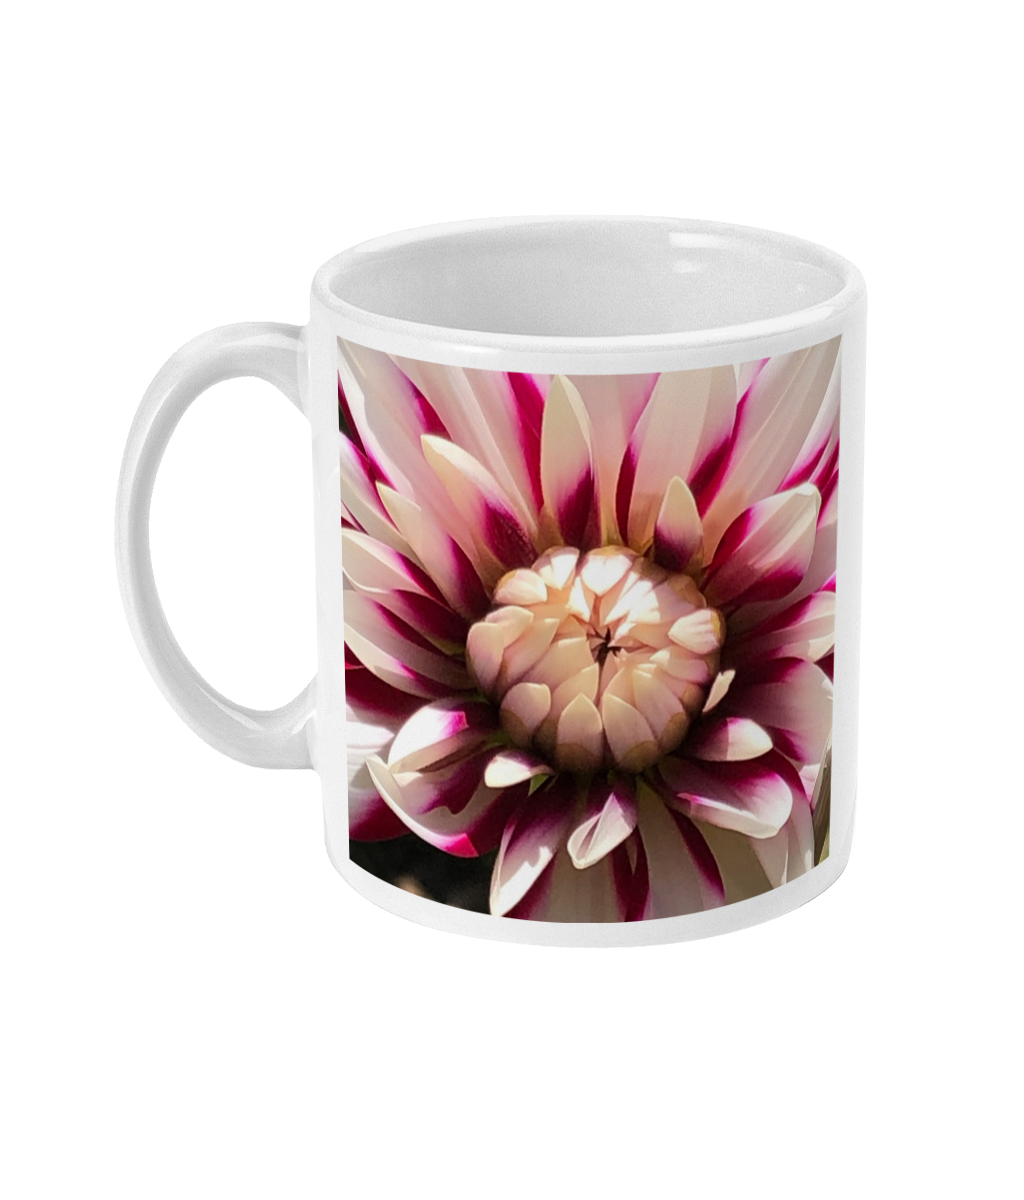 “Marco Marvel” Double Flower Mug - Nature of Flowers